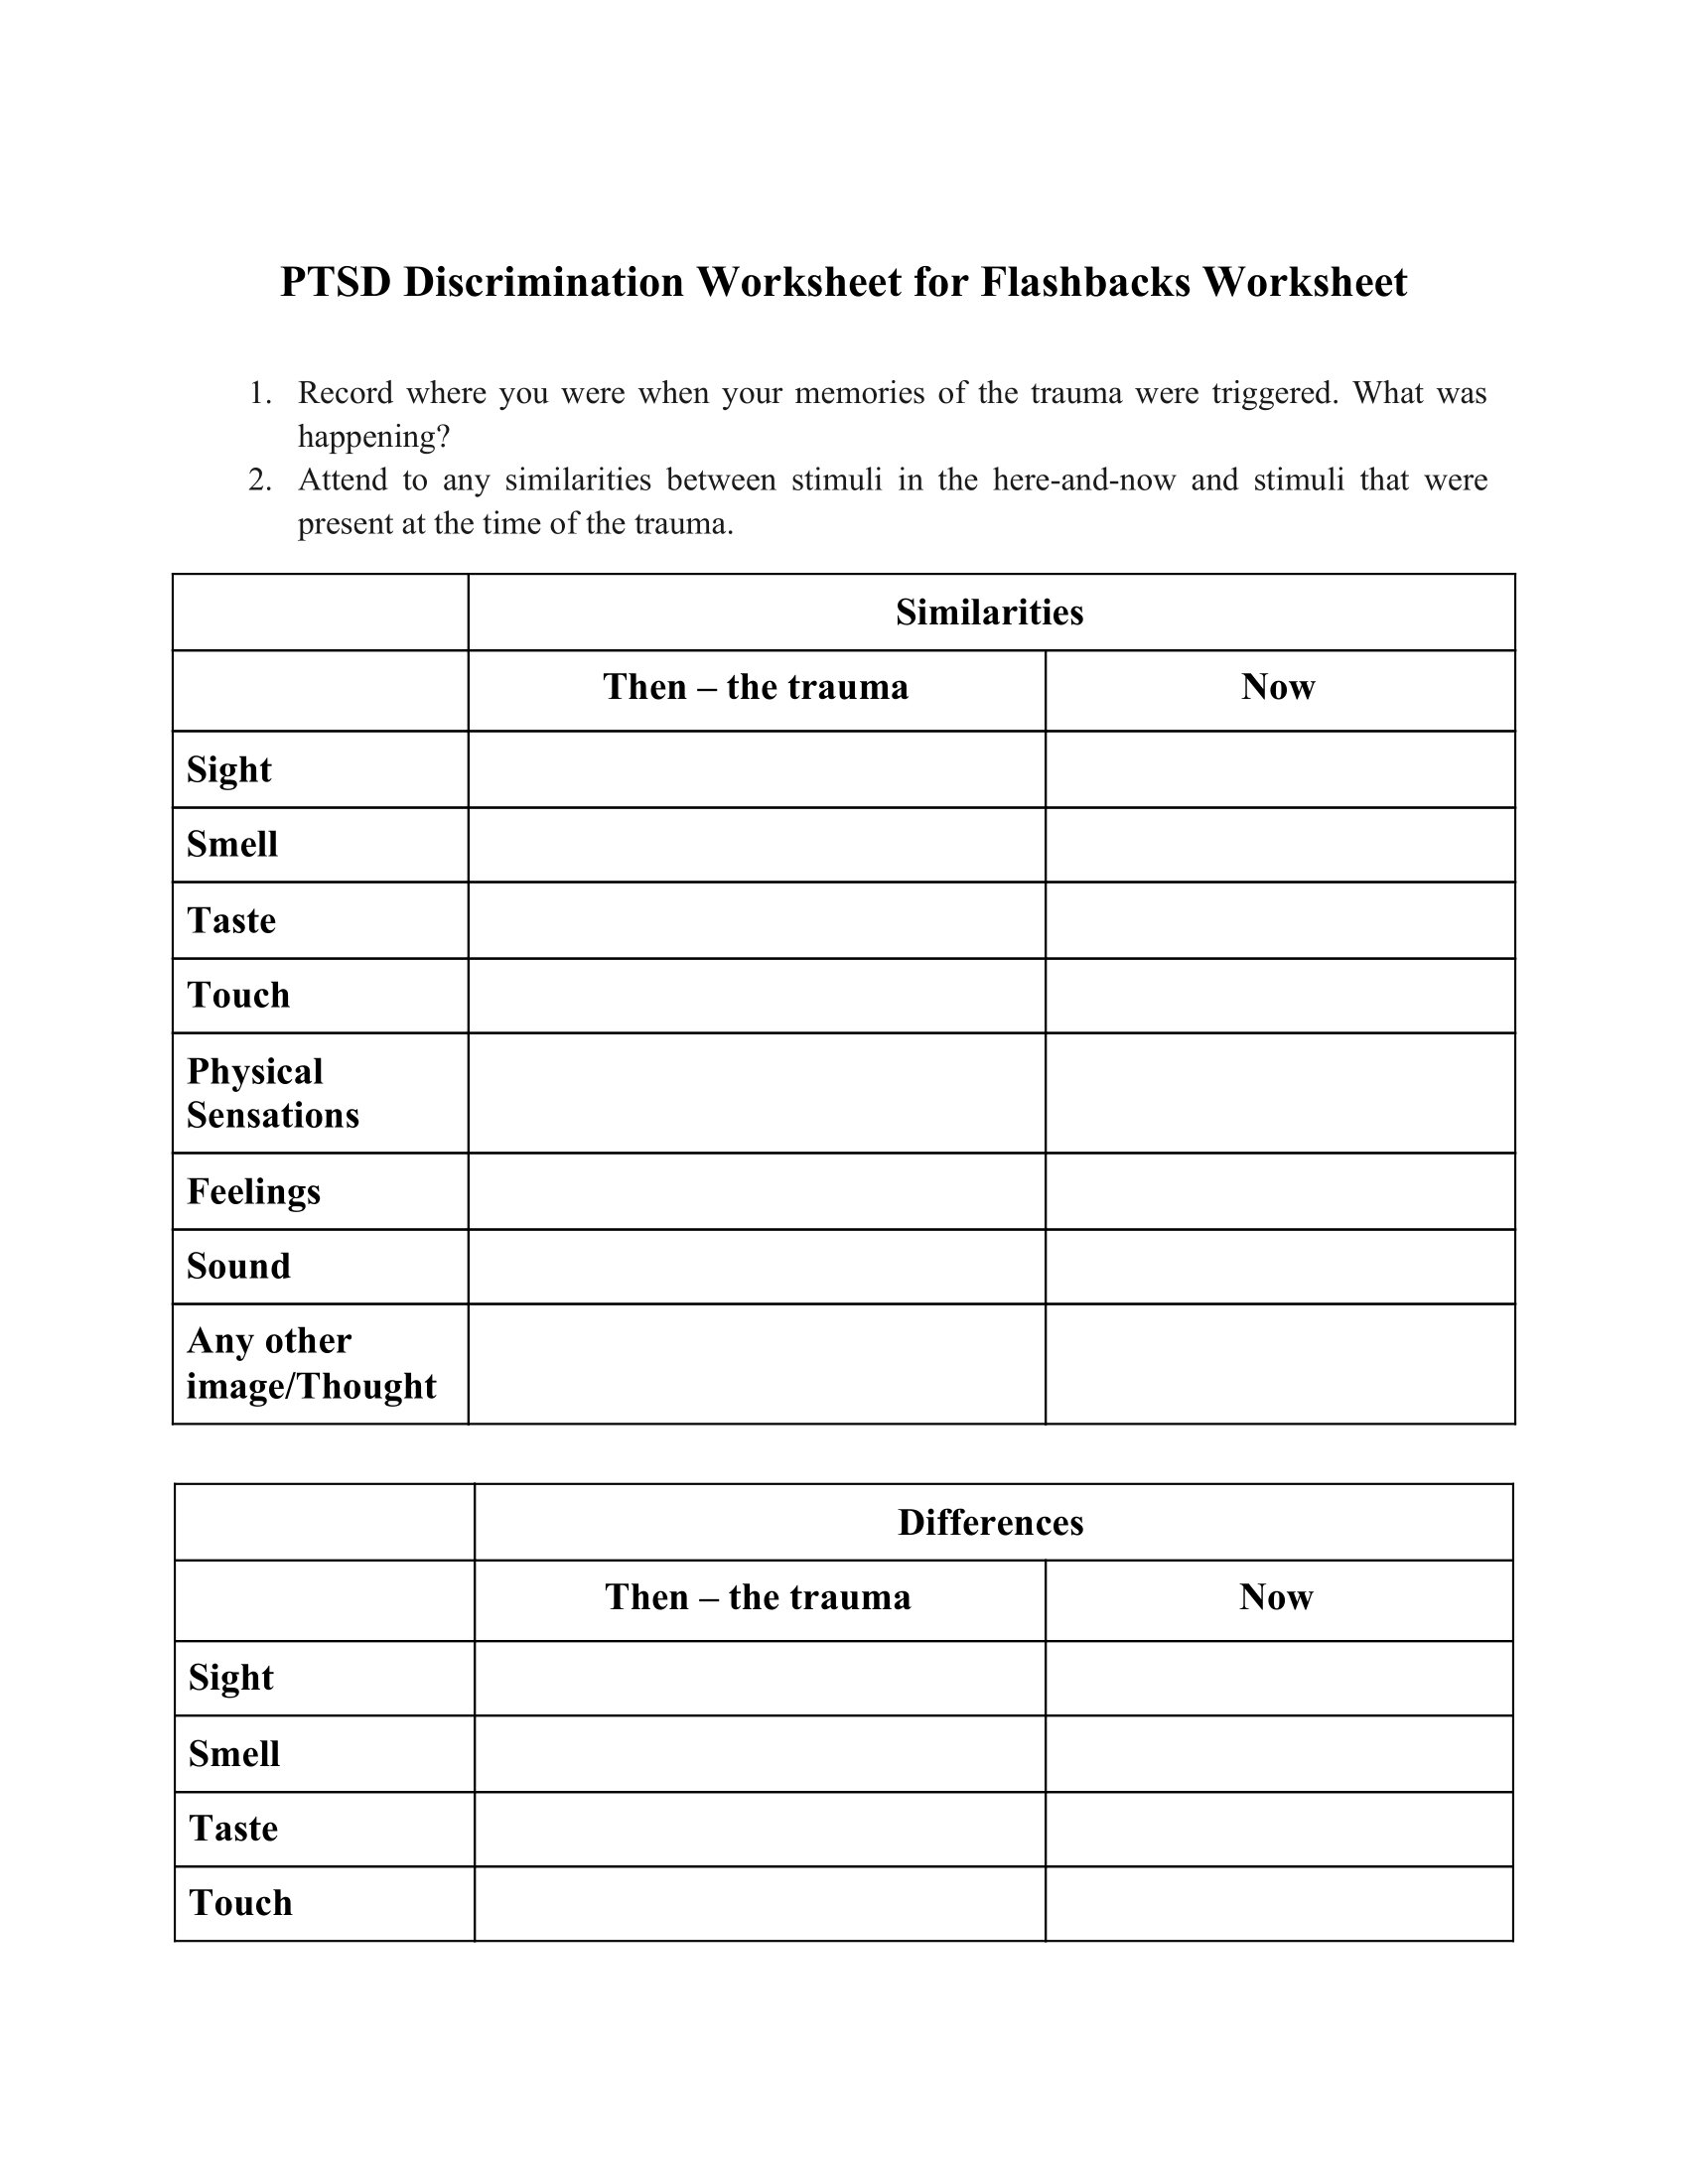 PTSD Discrimination Worksheet For Flashbacks Worksheet 